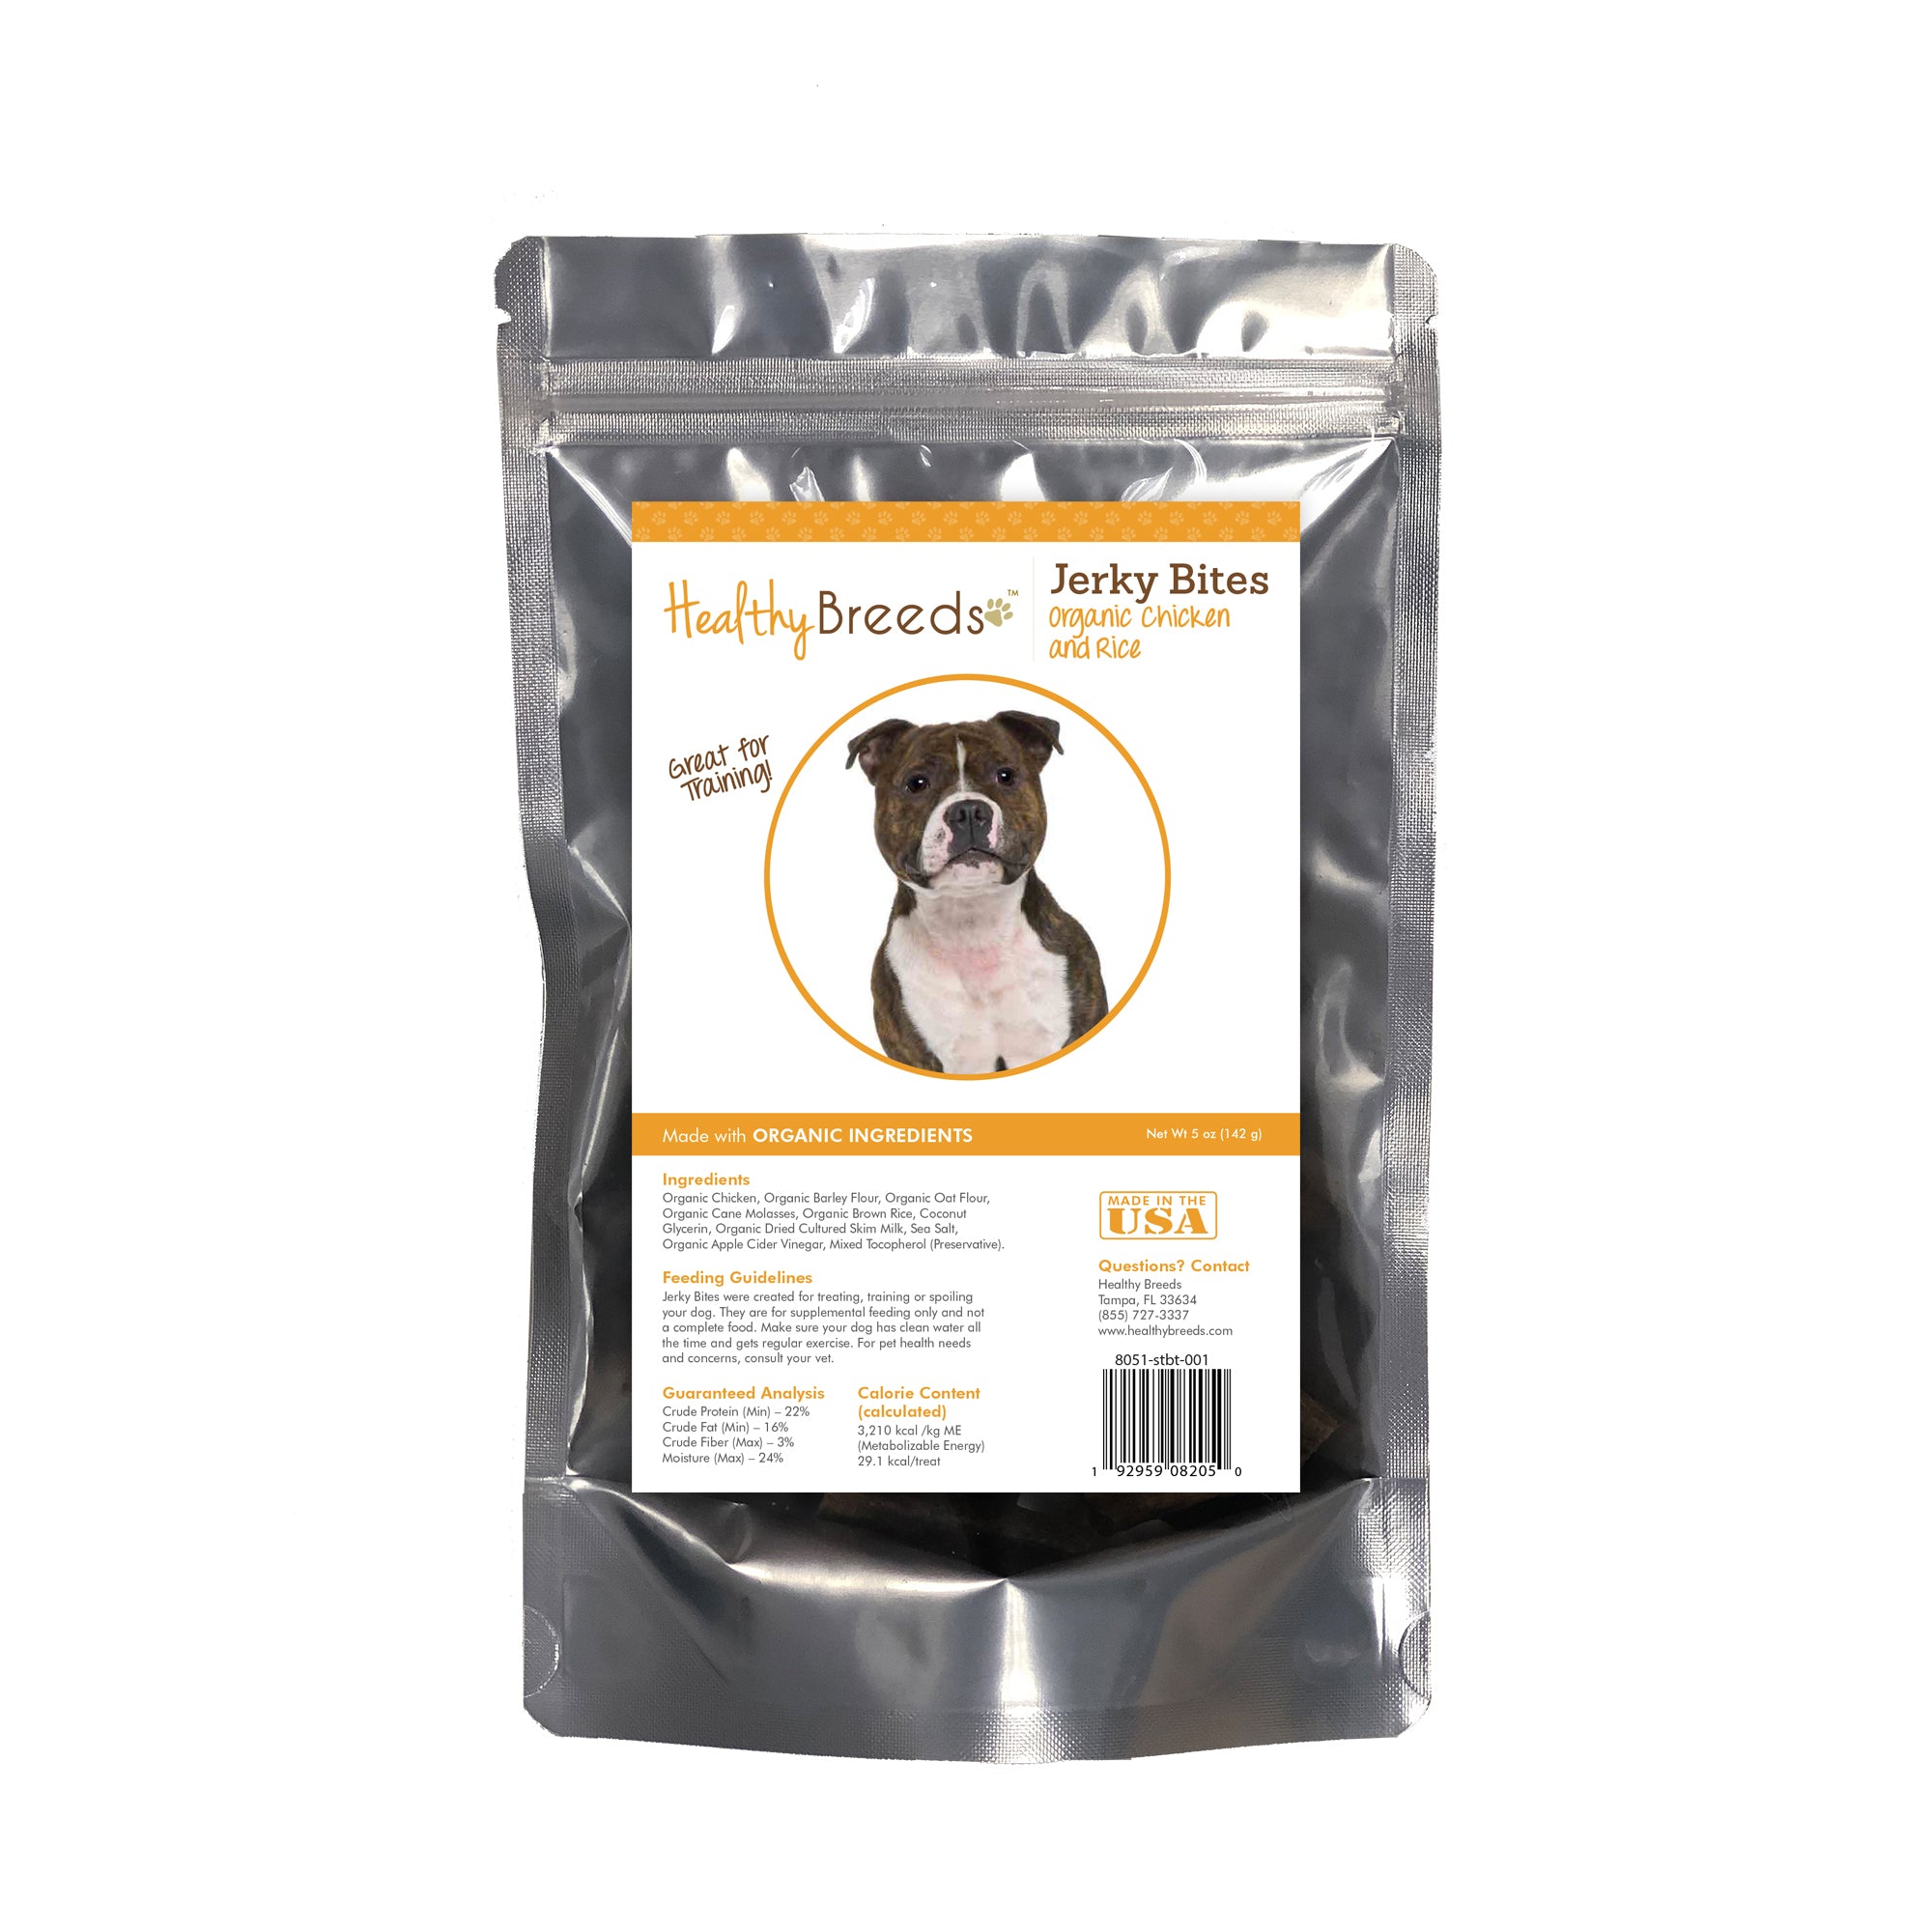 Staffordshire Bull Terrier Jerky Bites Chicken & Rice Recipe Dog Treats 5 oz